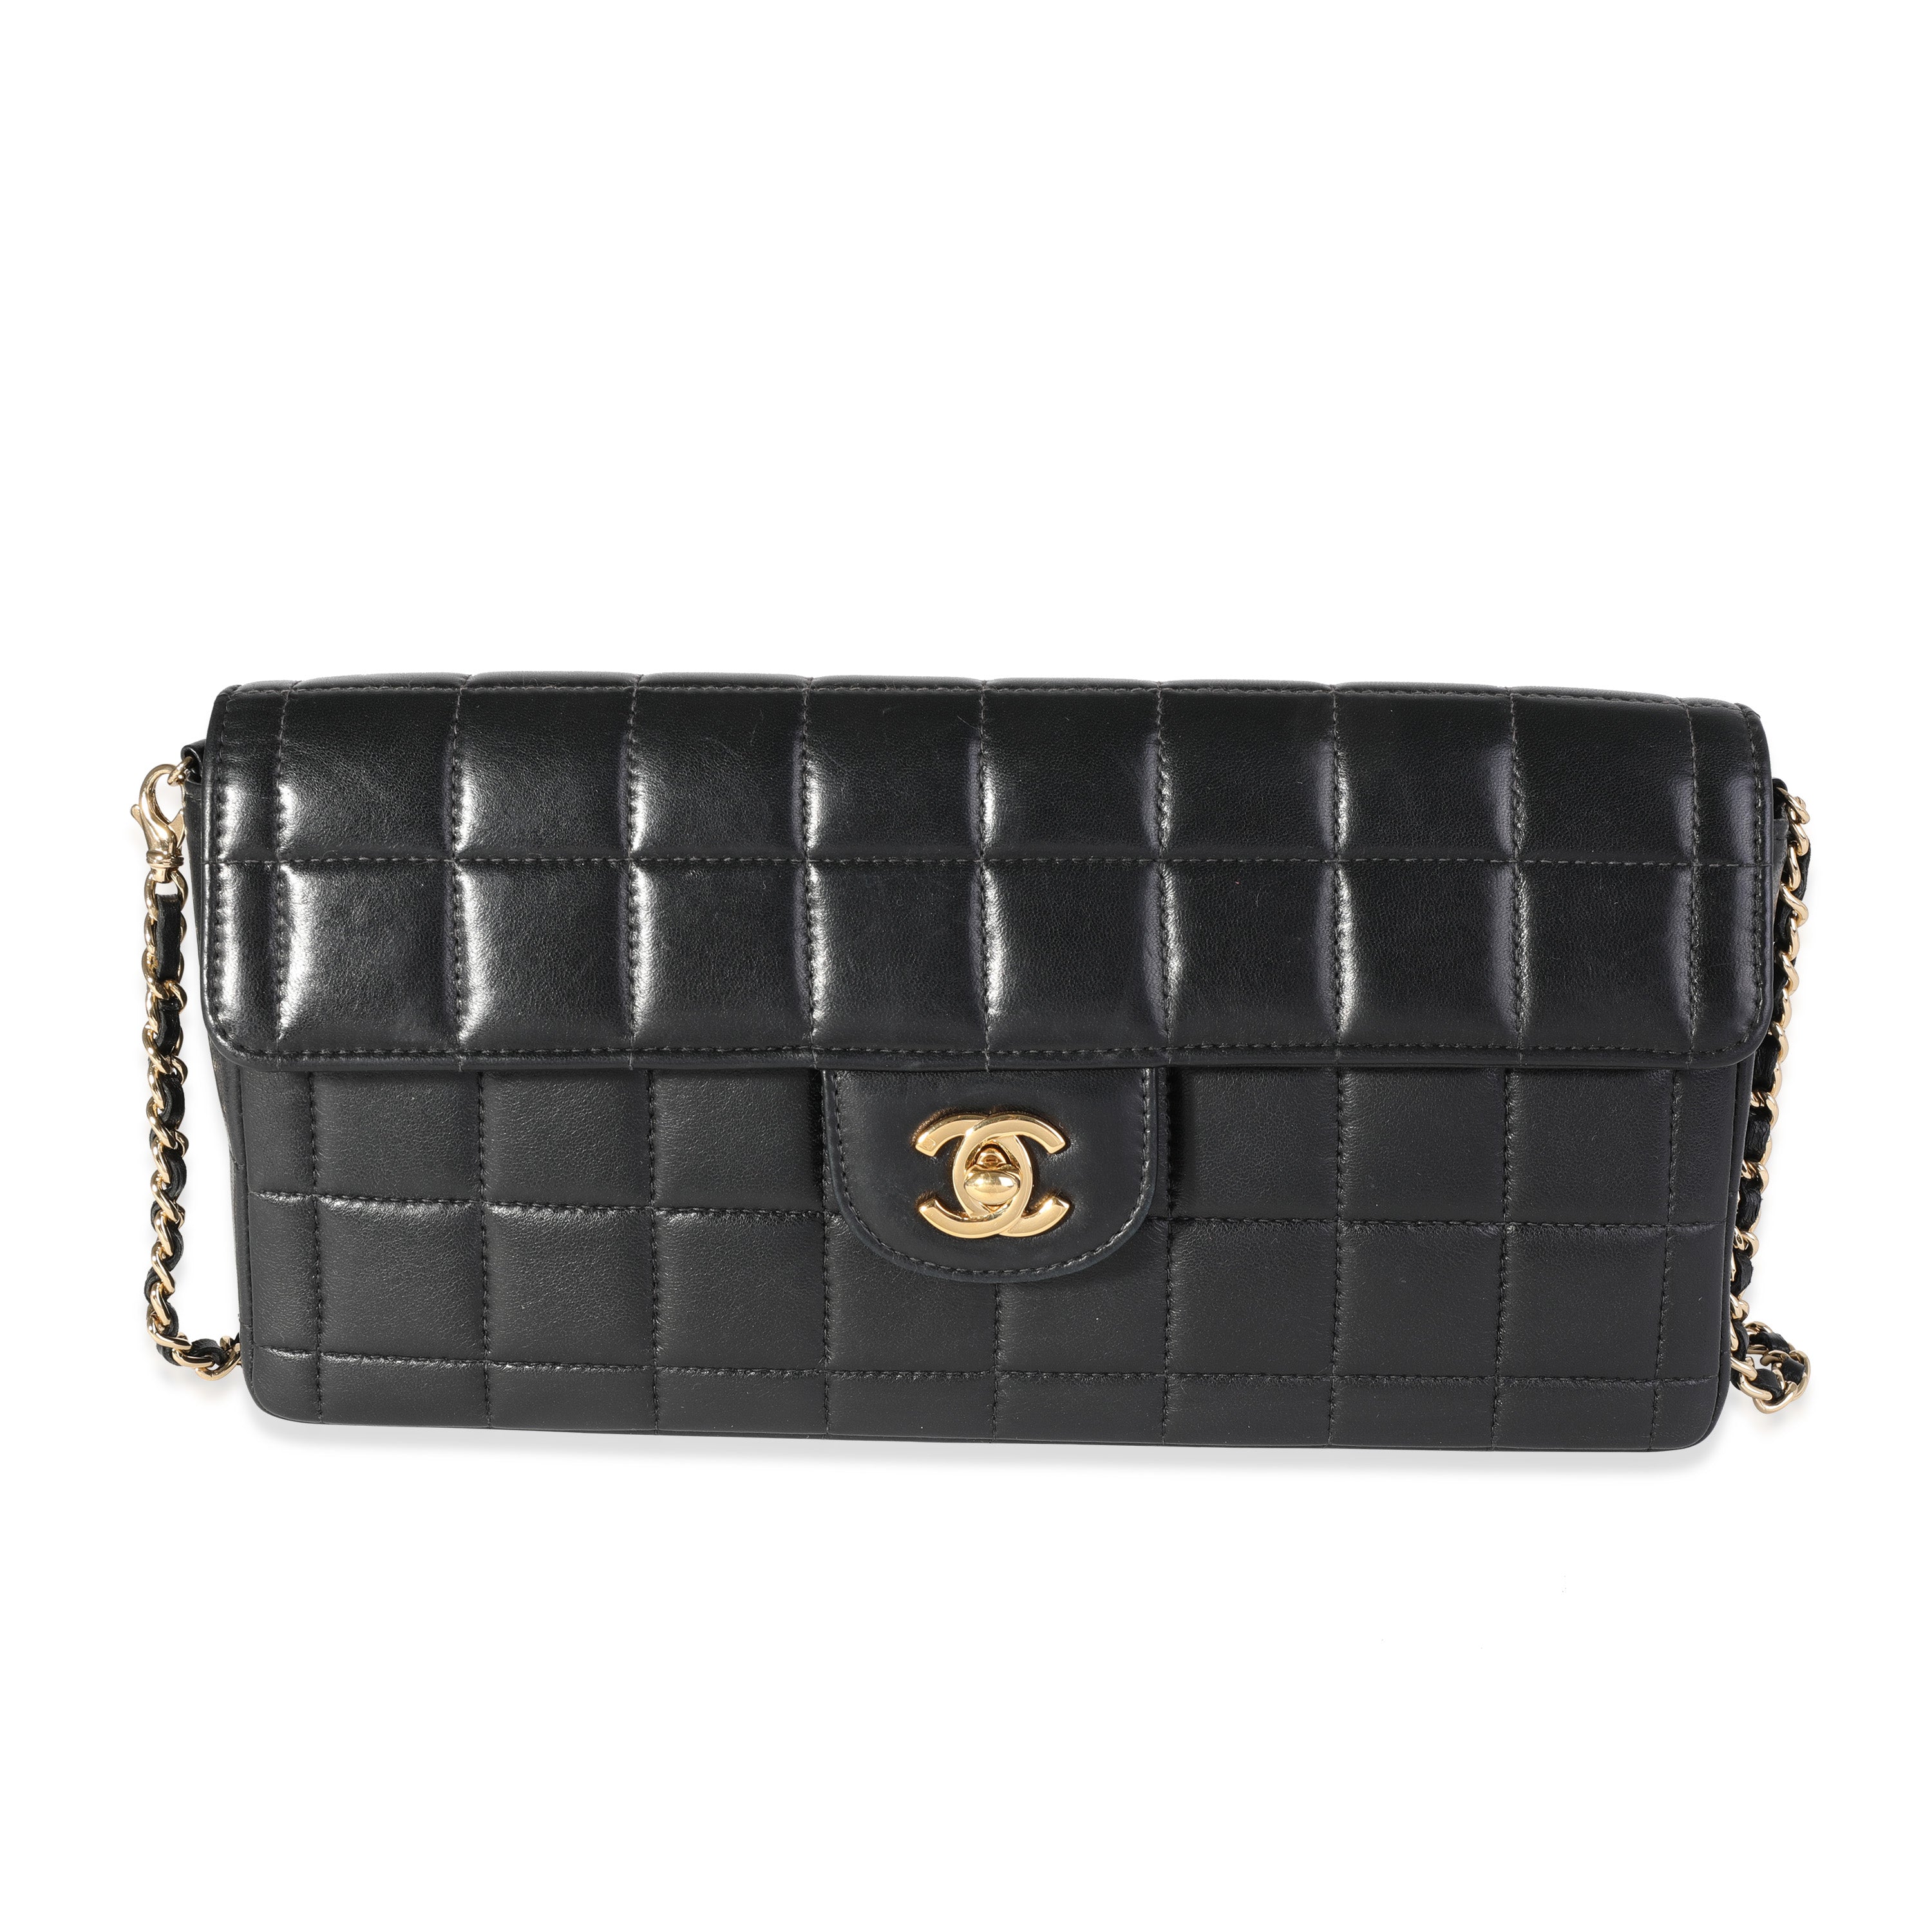 Chanel reissue chocolate bar shoulder bag in dark brown – Lady Clara's  Collection